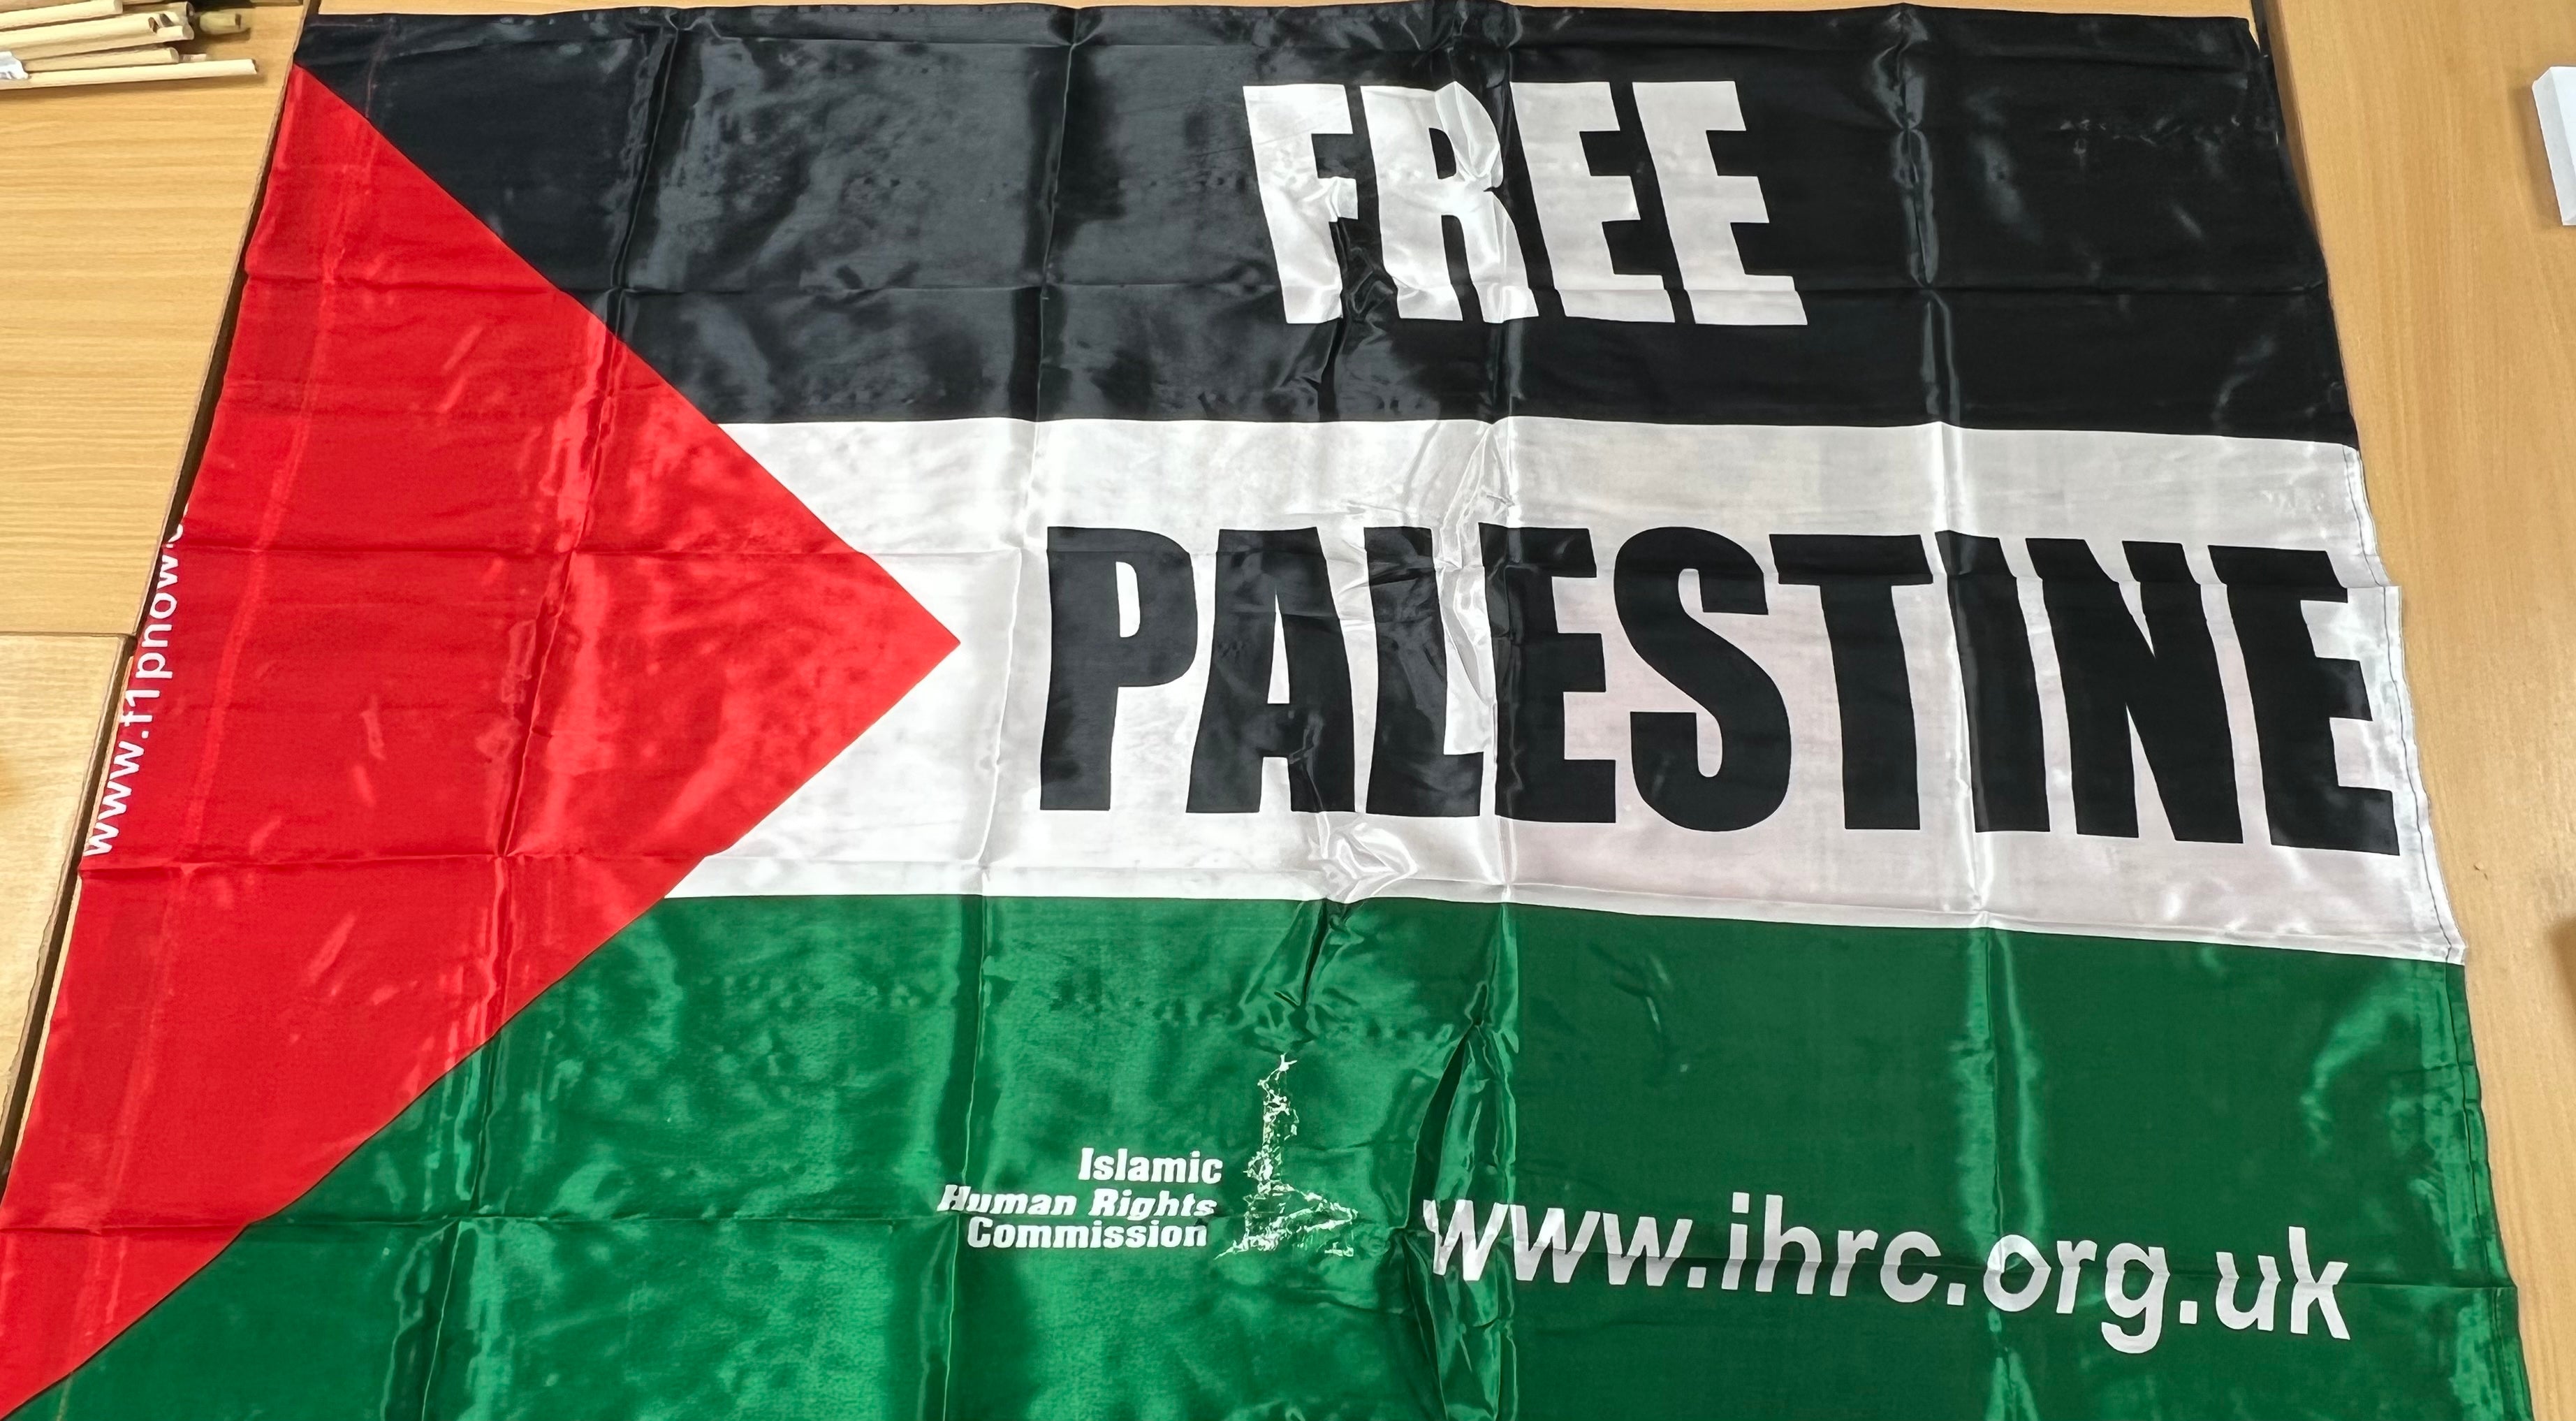 Palestine - Free Palestine Flag